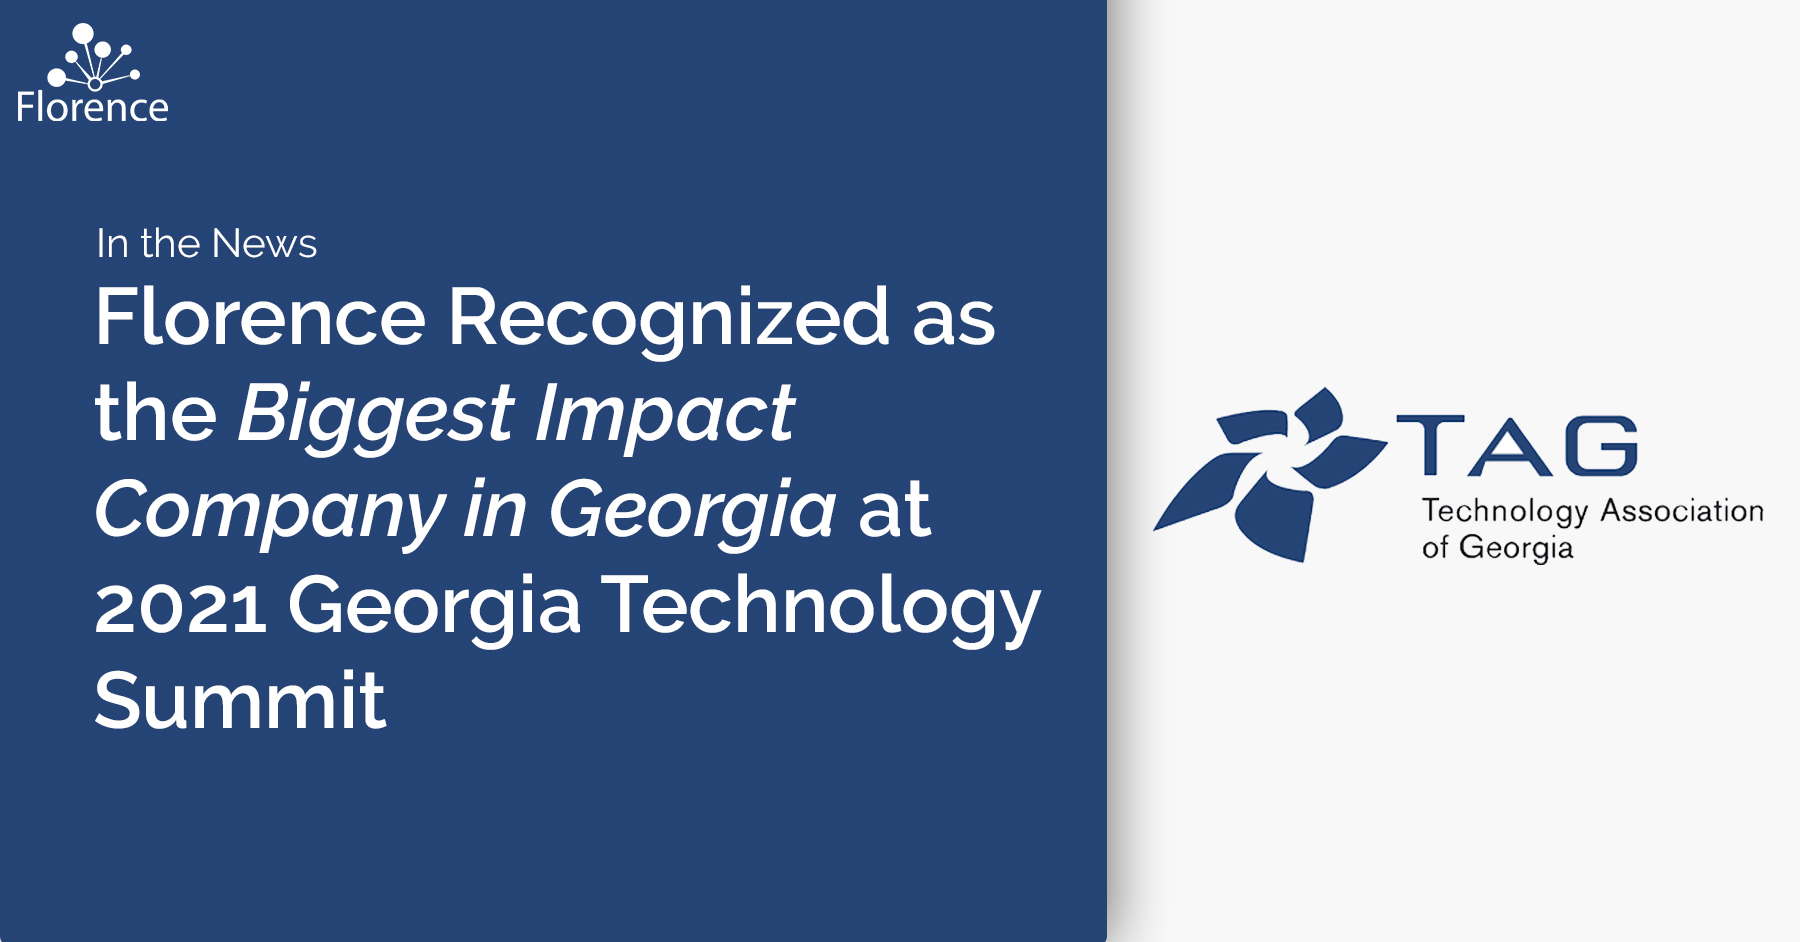 Florence Technology Association of Georgia Biggest Impact